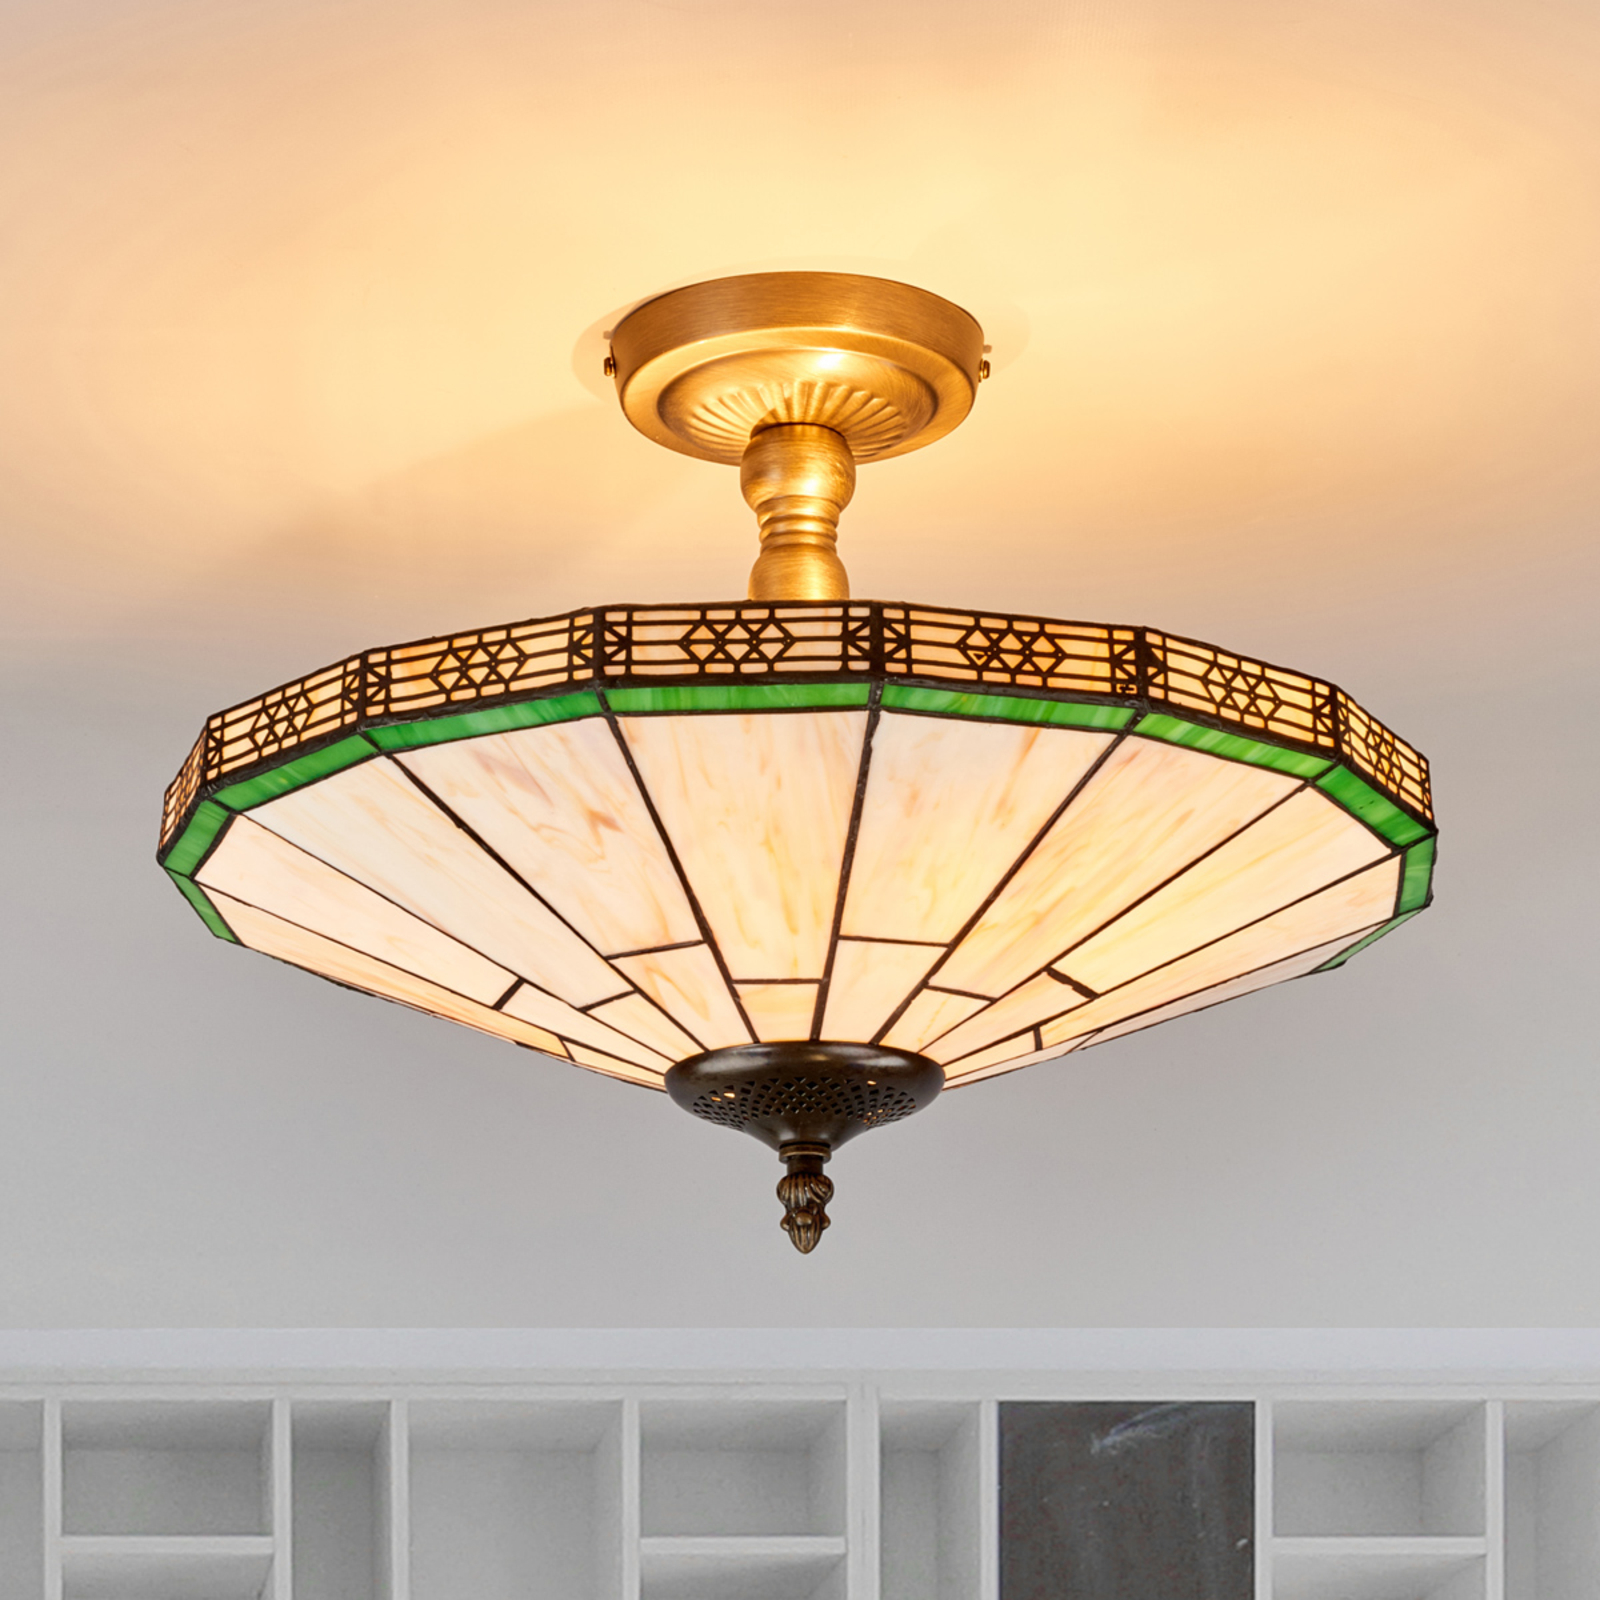 New York - klassisk taklampe i Tiffany-stil